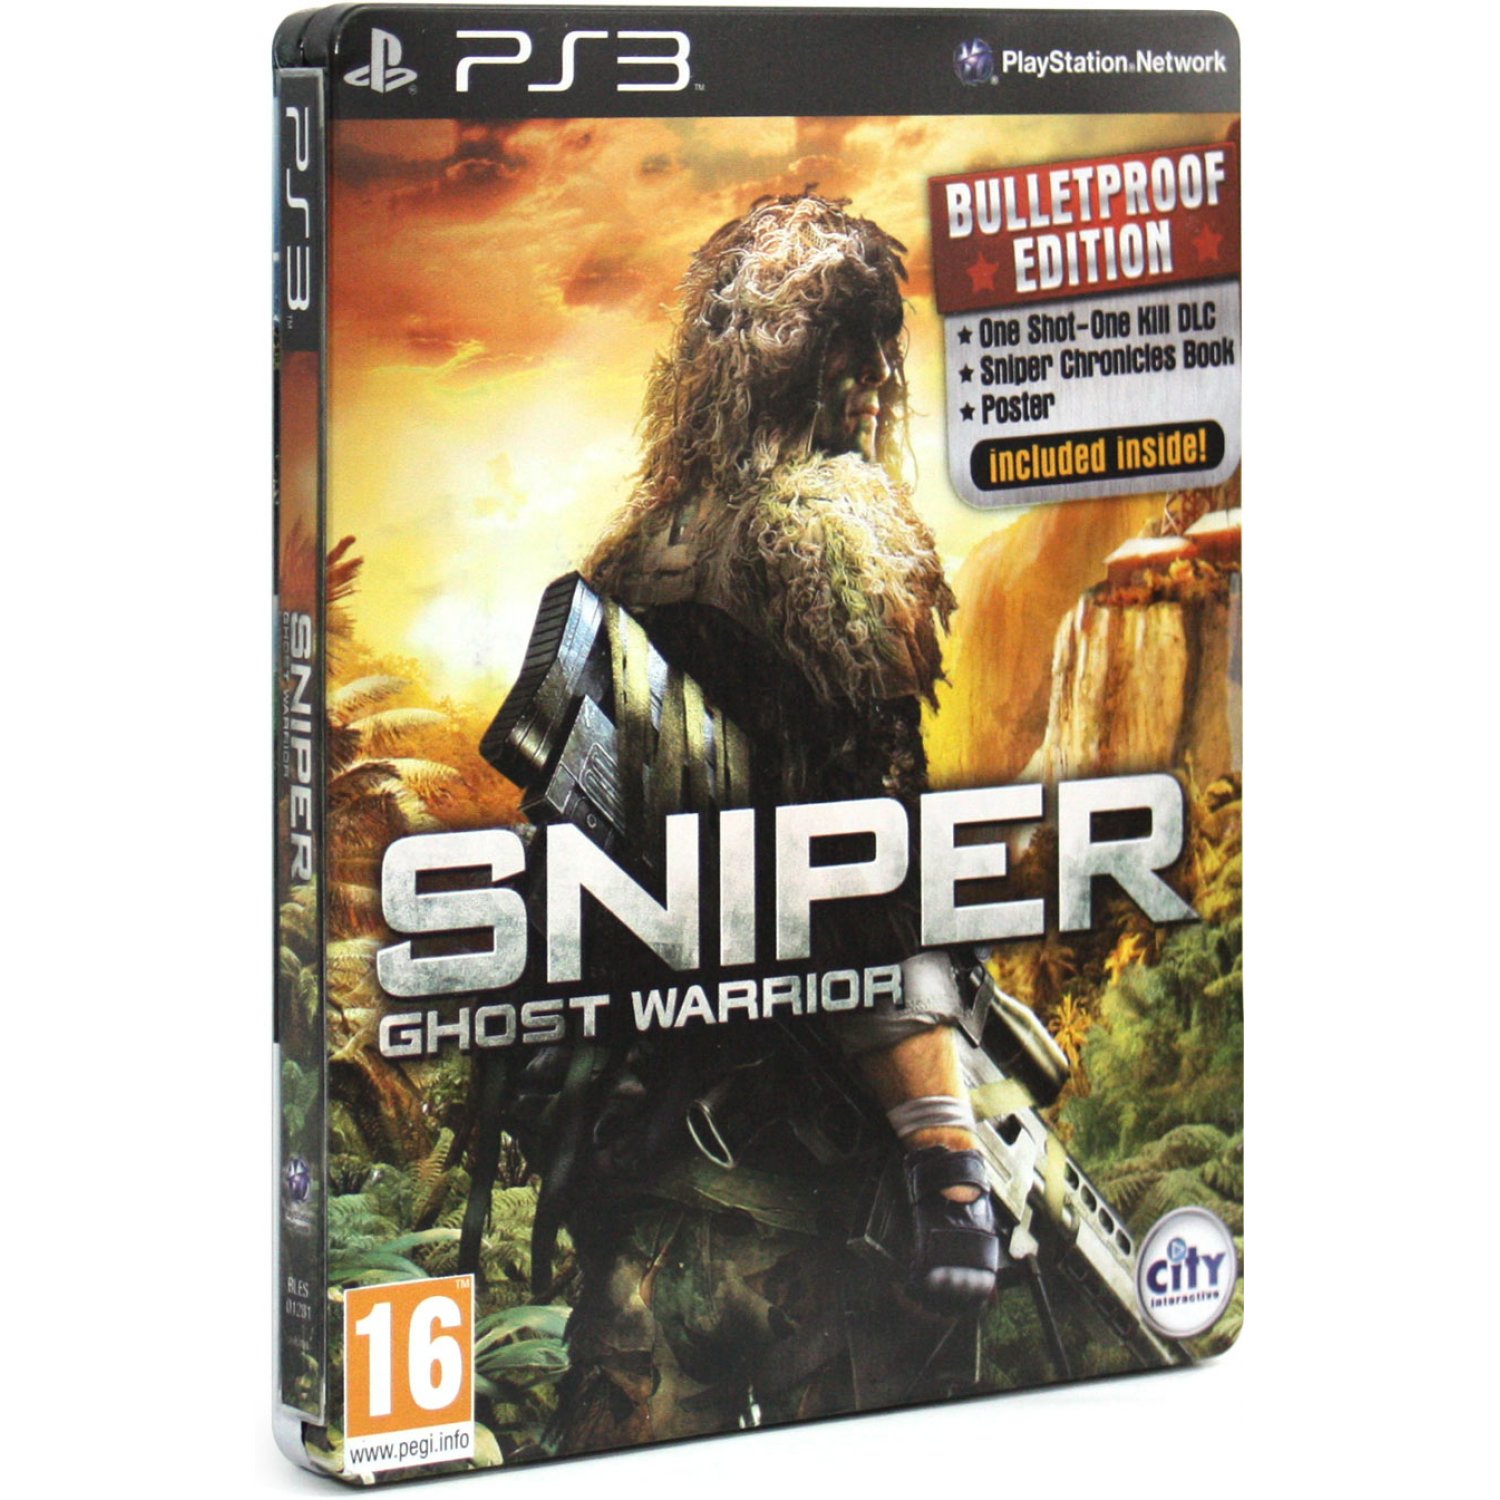 Sniper Ghost Warrior Bulletproof Edition